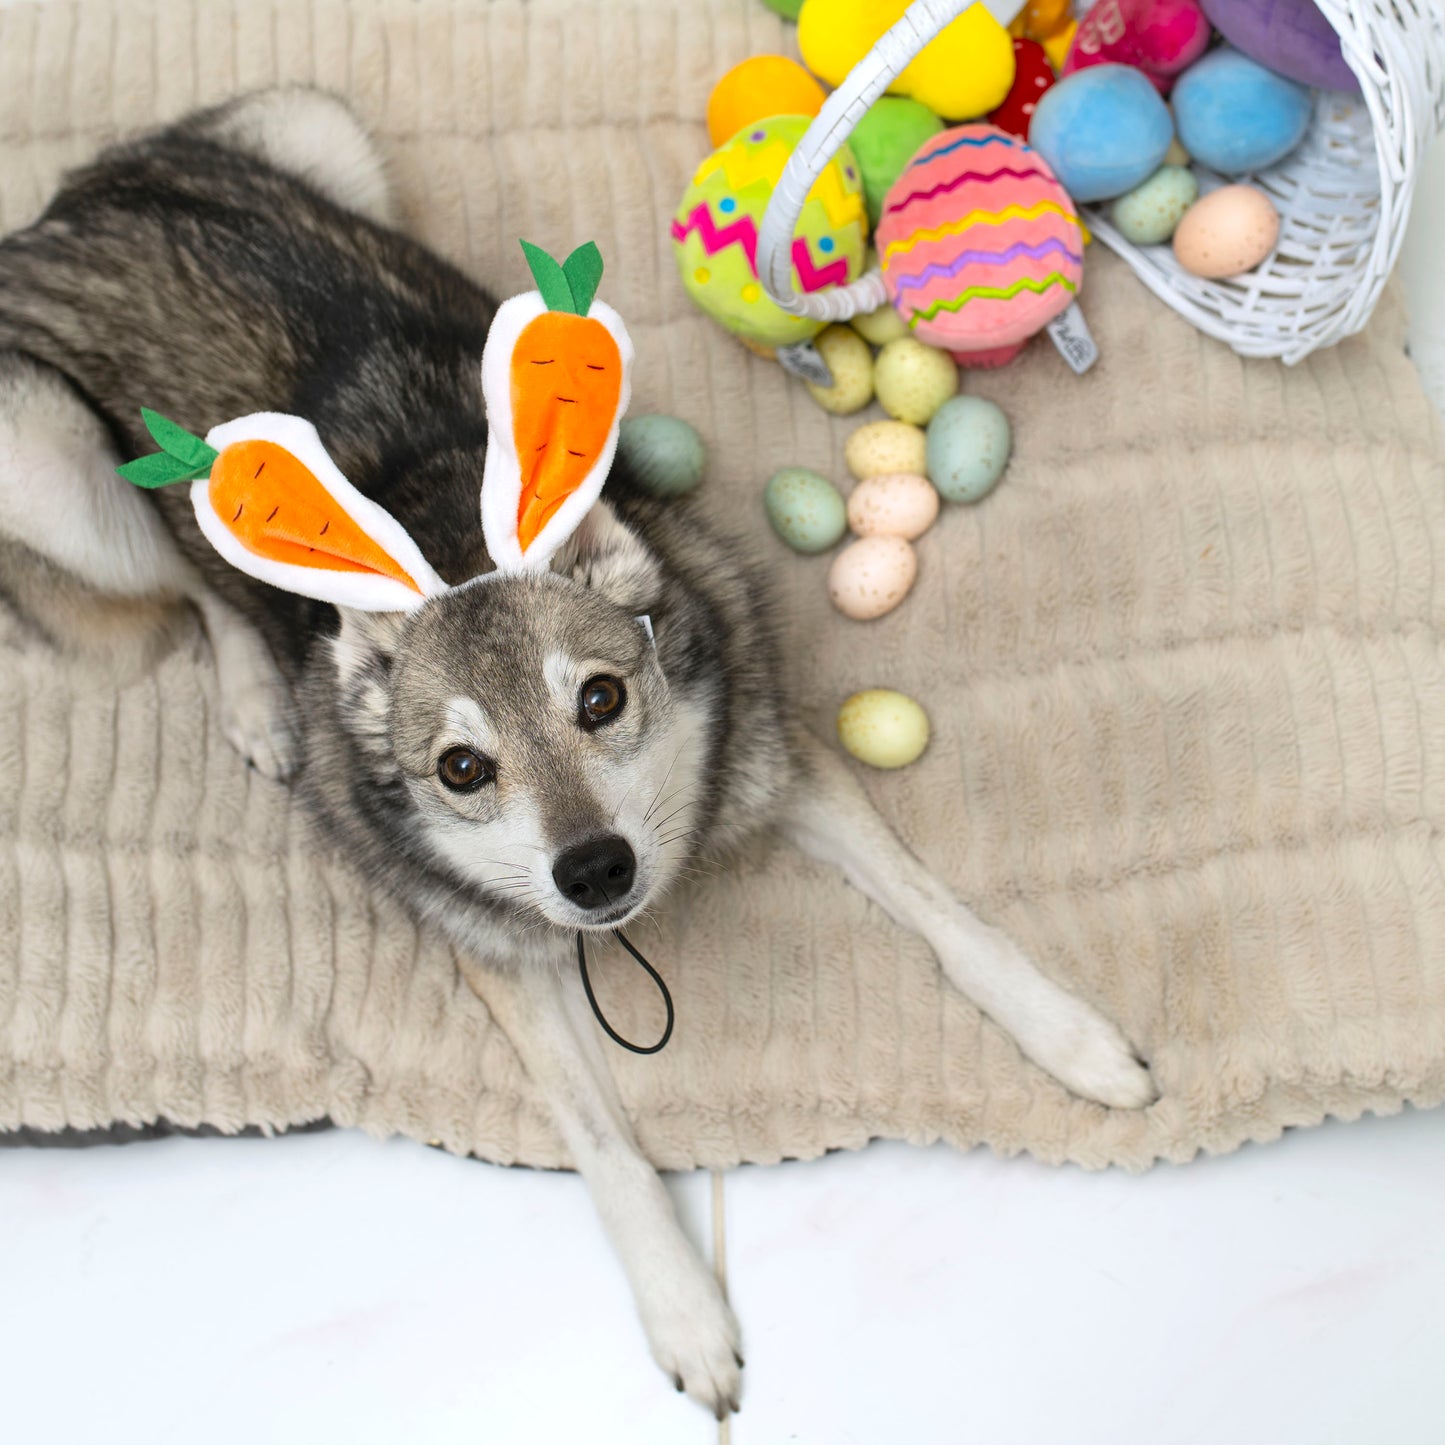 Midlee Carrot Bunny Ears Easter Dog Headband Costume